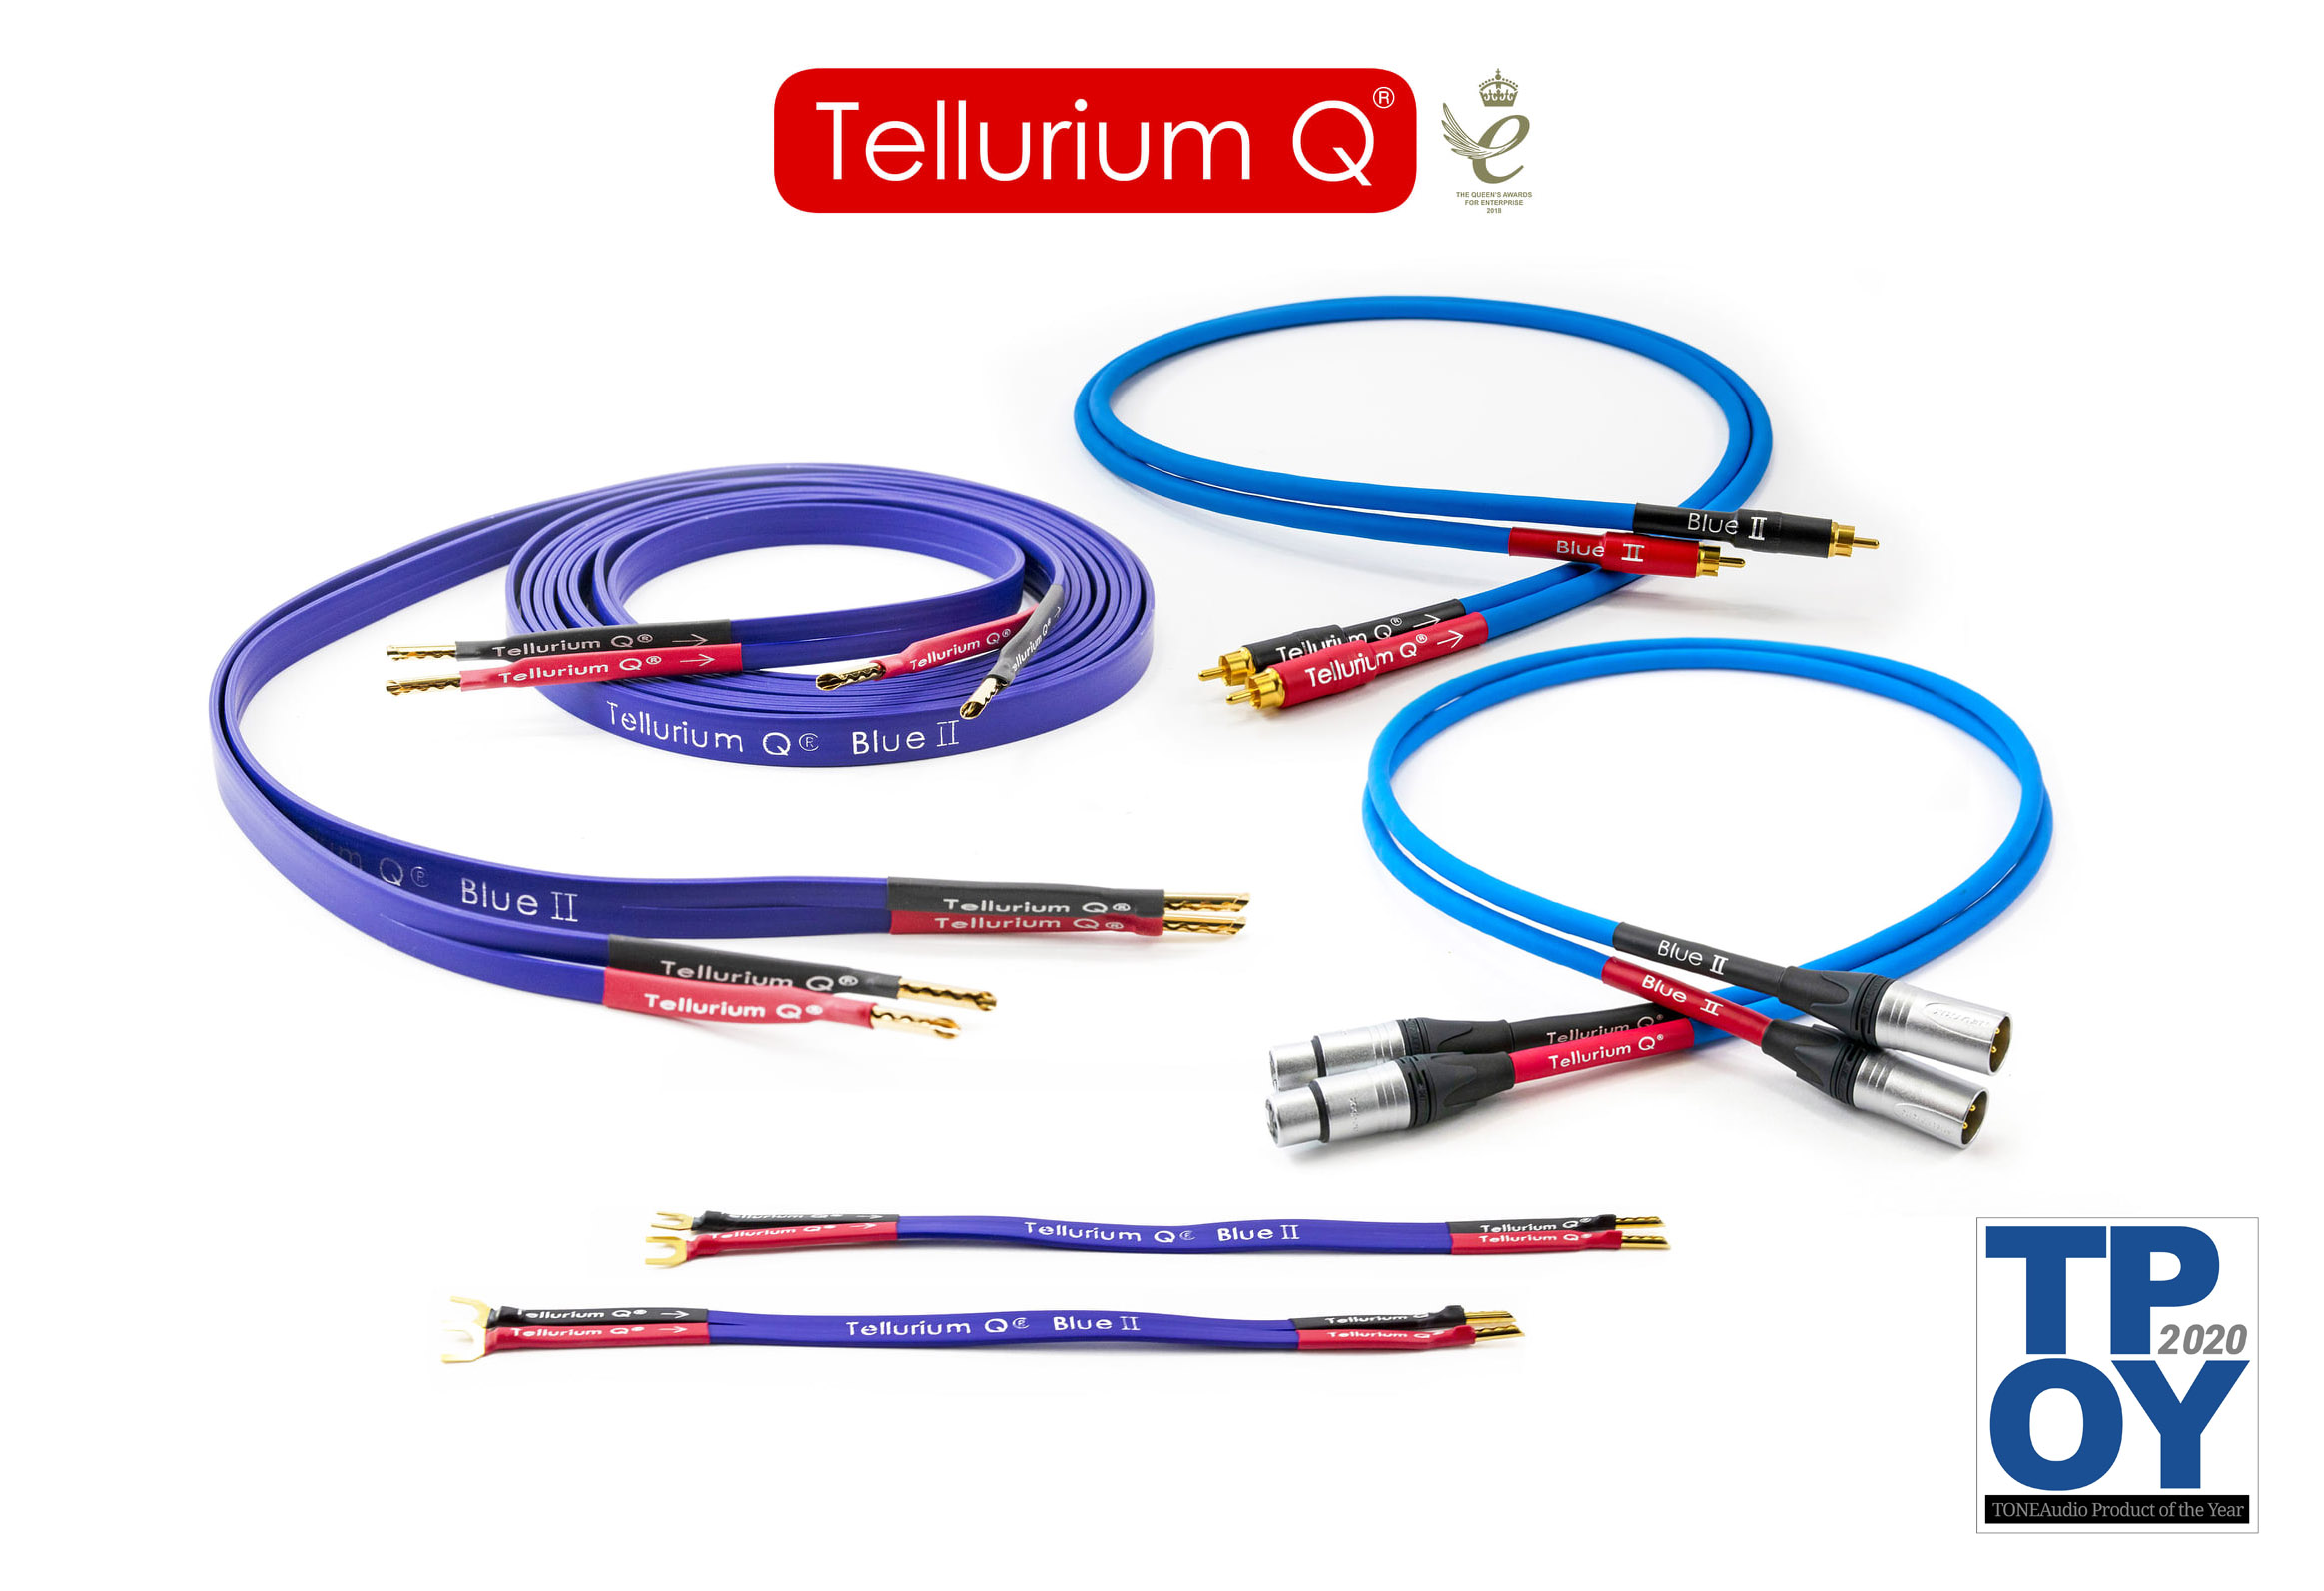 Blue II Kabel von Tellurium Q ist Product of the Year 2020 bei Tone Audio